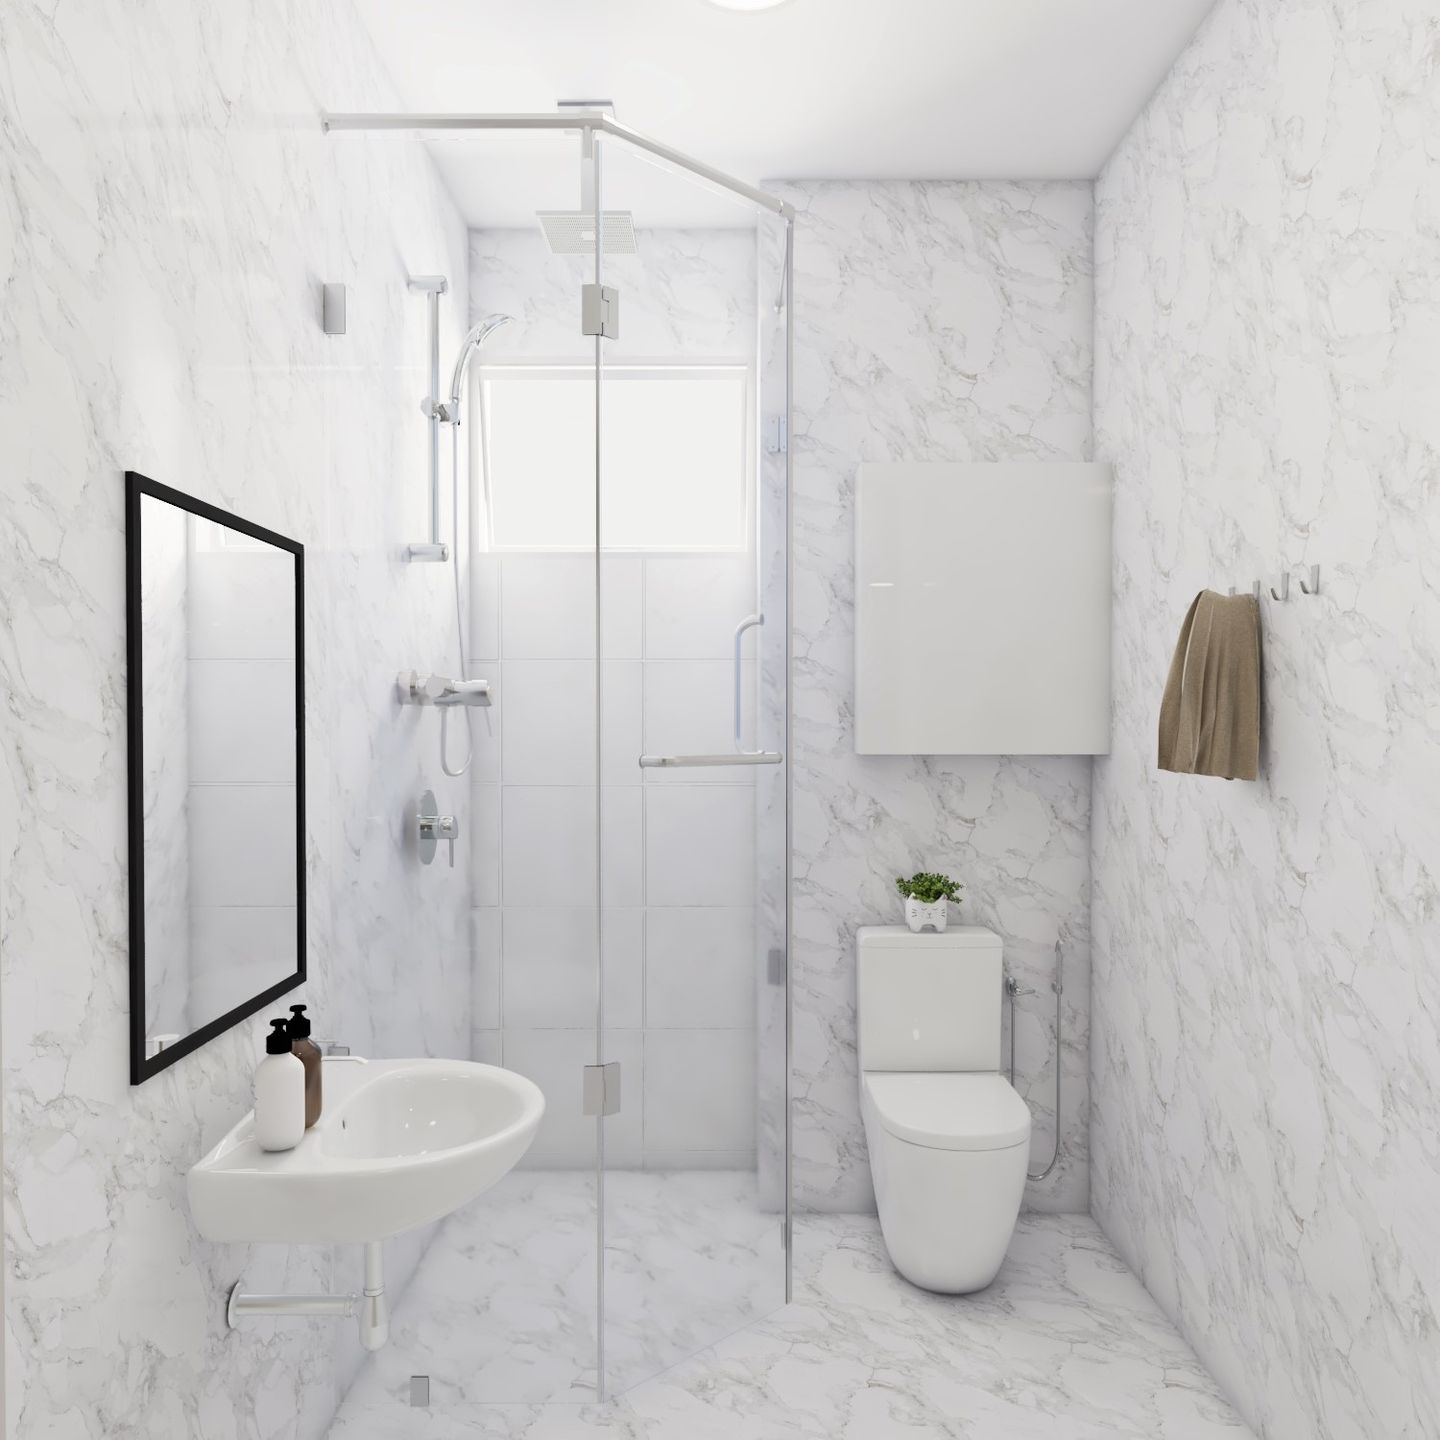 White Bathroom Walls And Flooring Tiles Design - Livspace